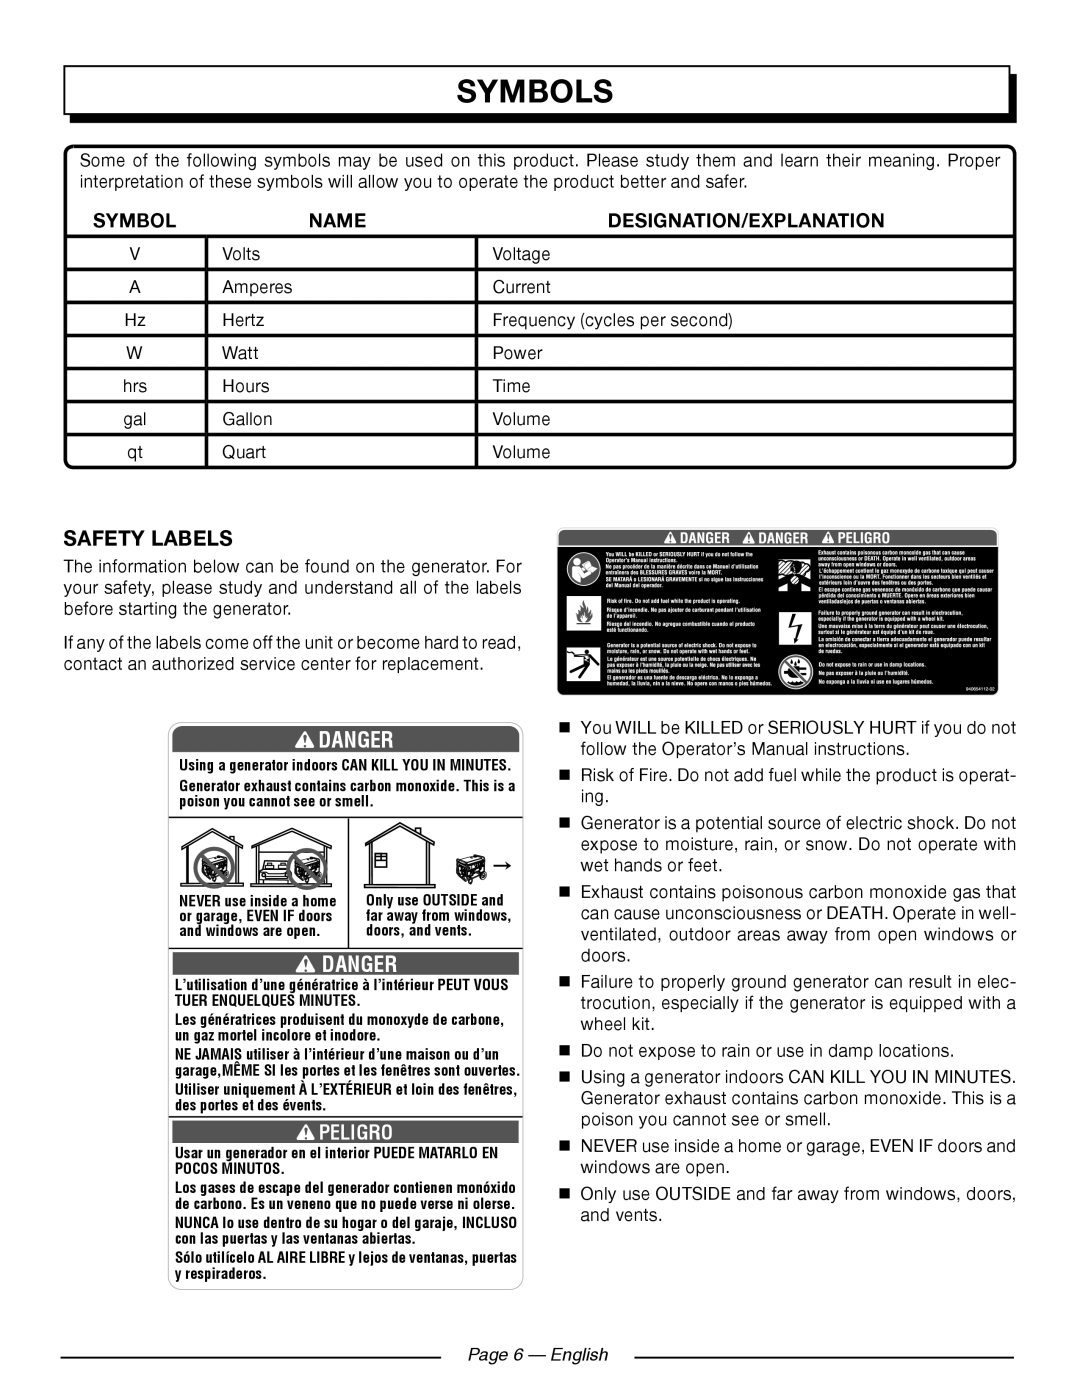 Homelite HGCA5700 Safety Labels, Danger, Peligro, Page 6 — English, Symbols, Name, Designation/Explanation 